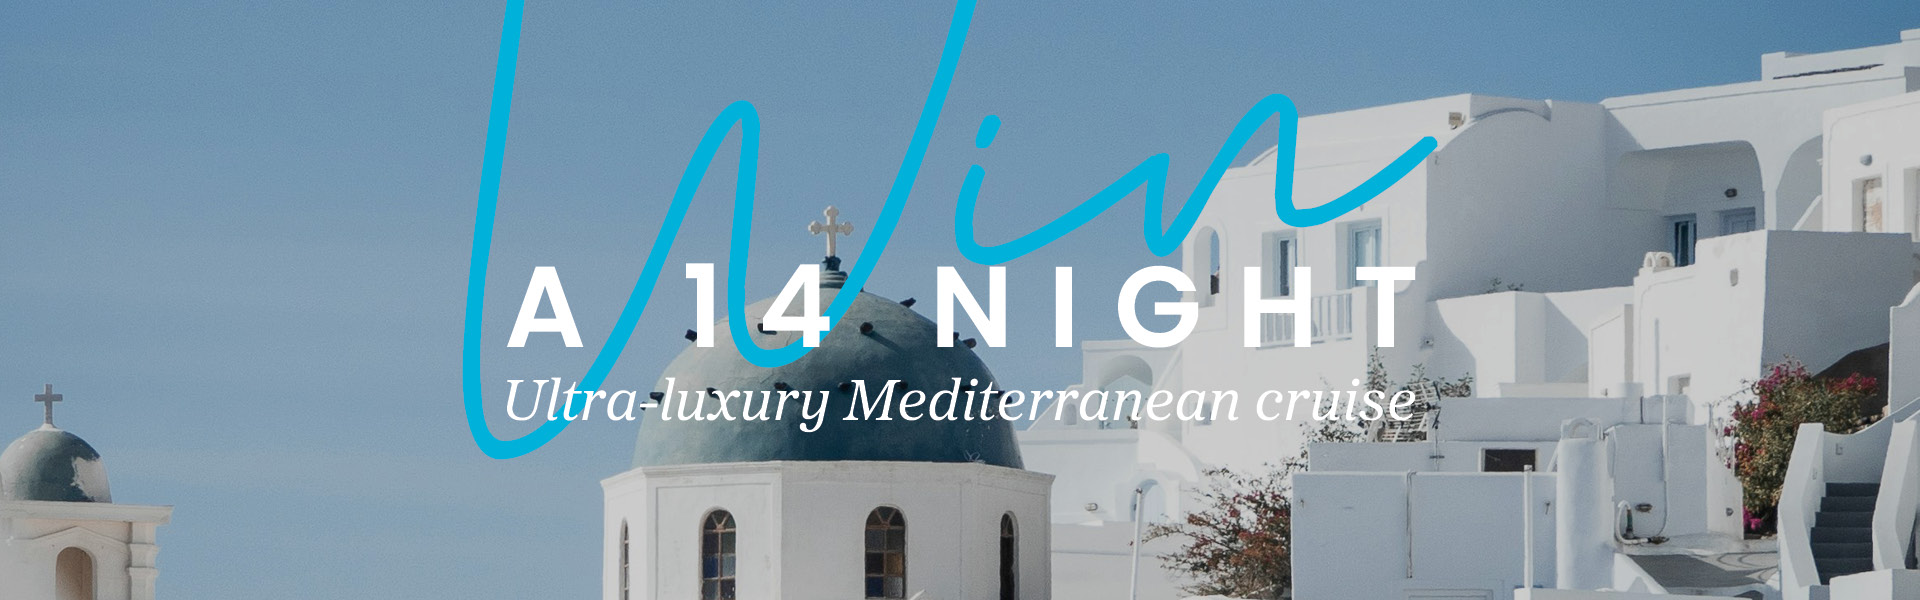 Win a 14-night ultra-luxury Mediterranean cruise with Crystal worth £20,000